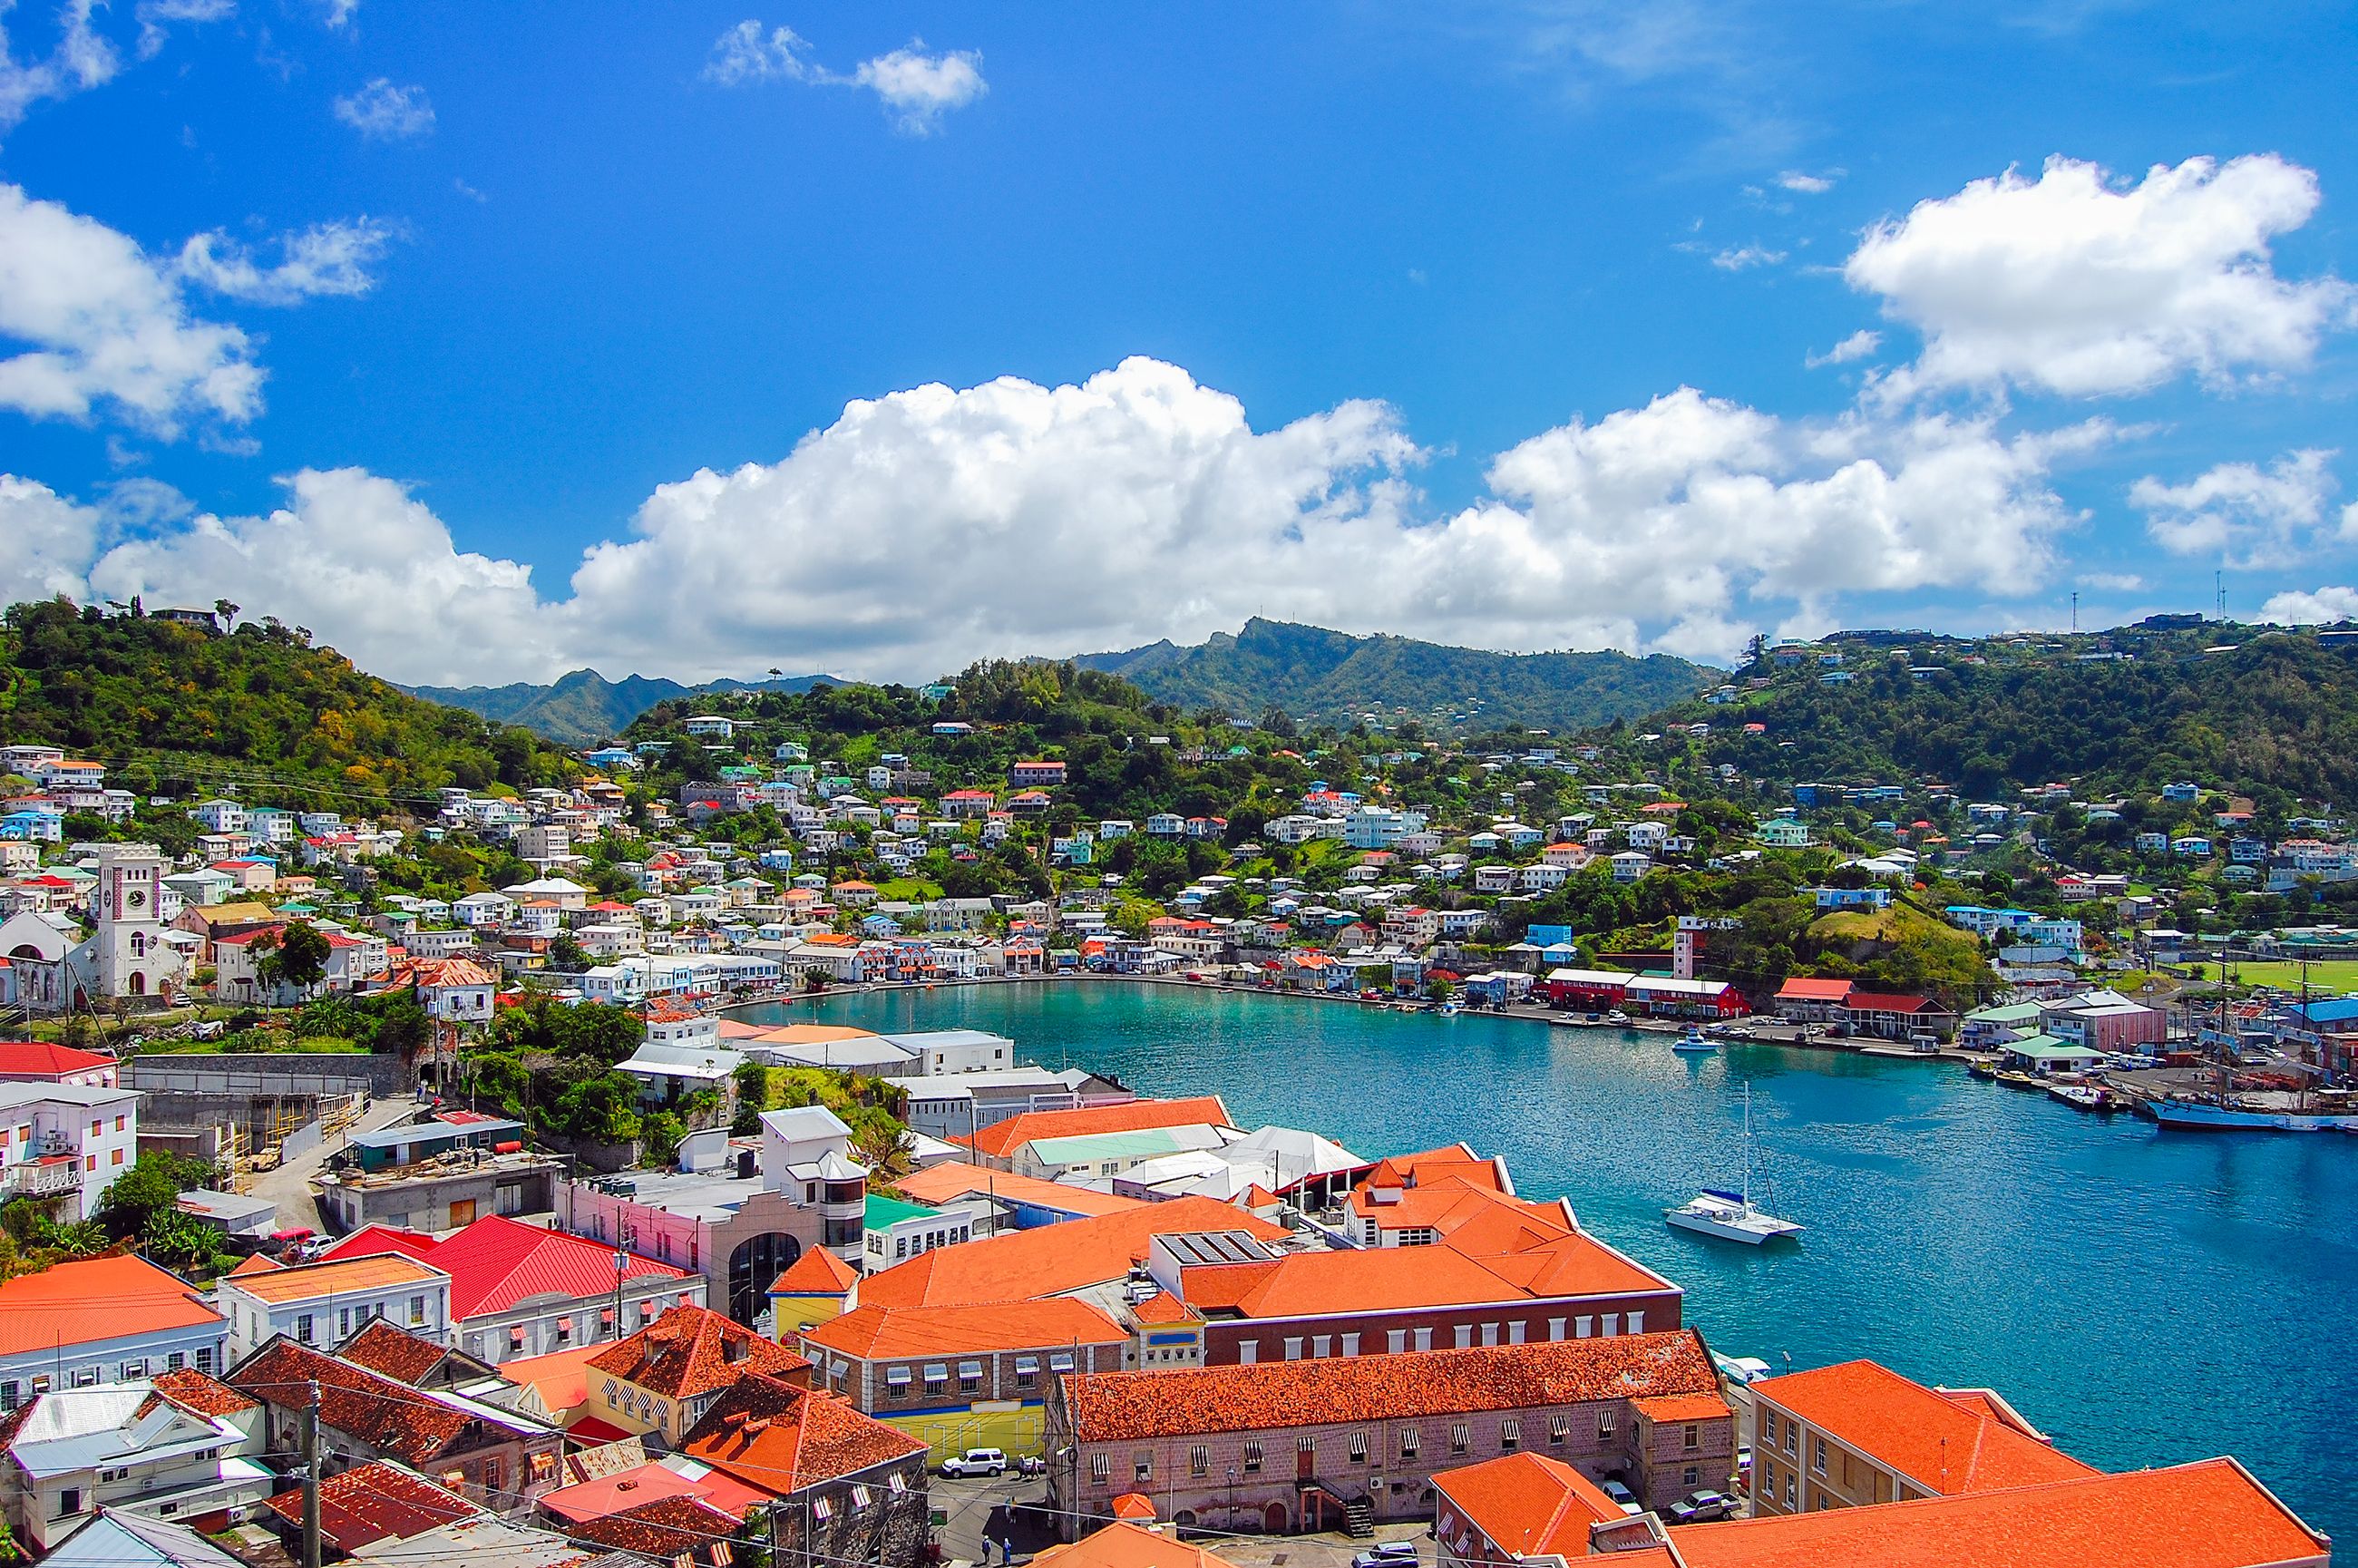 View of Saint George's town, capital of Grenada island, Caribbean region of Lesser Antilles